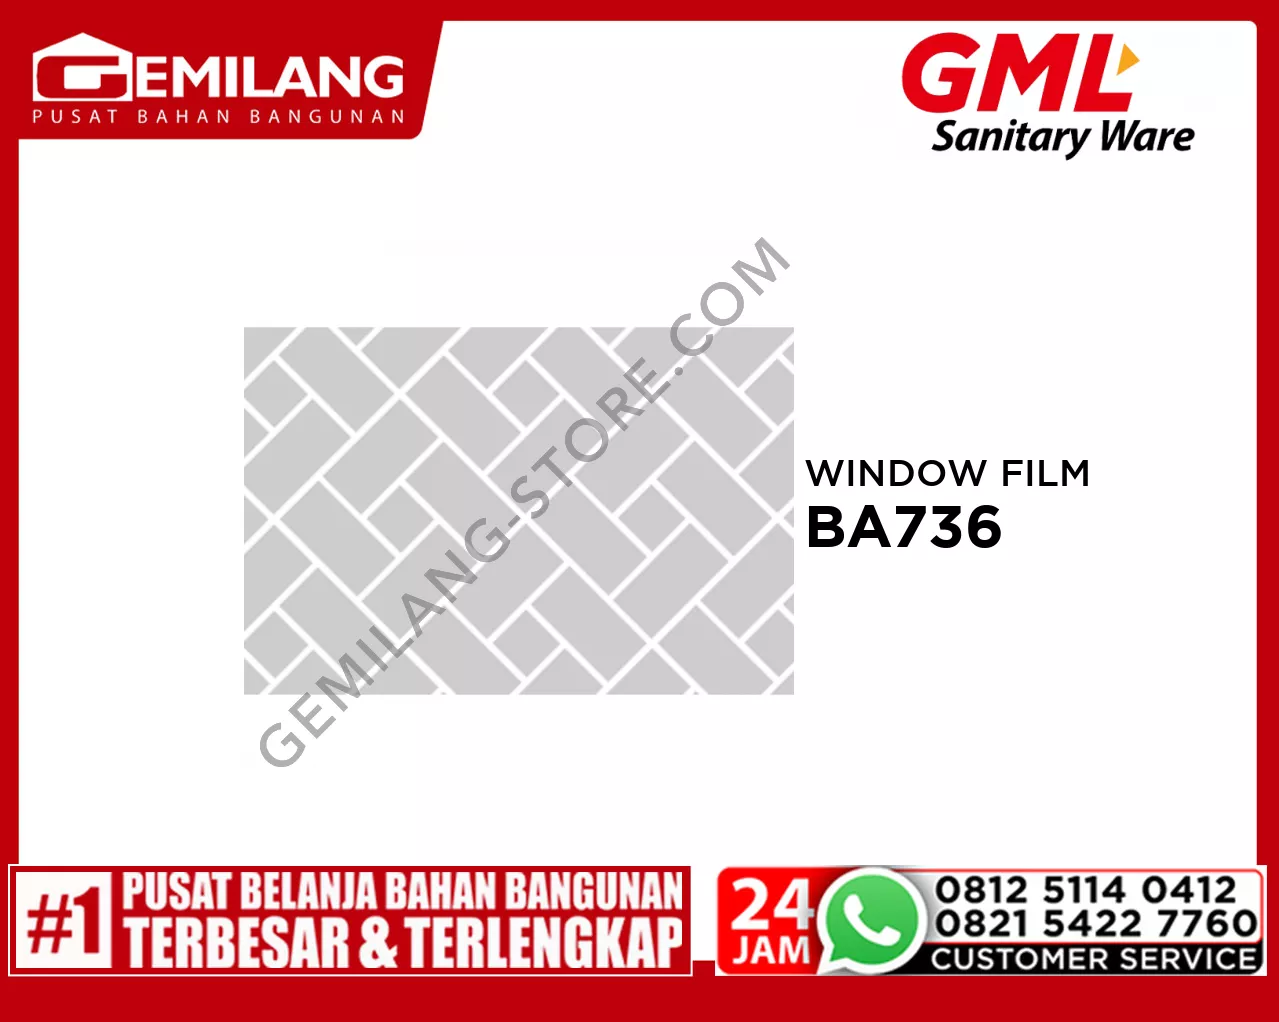 GML 2D STATIC WINDOW FILM BA736 50 x 90cm x 0.18mm